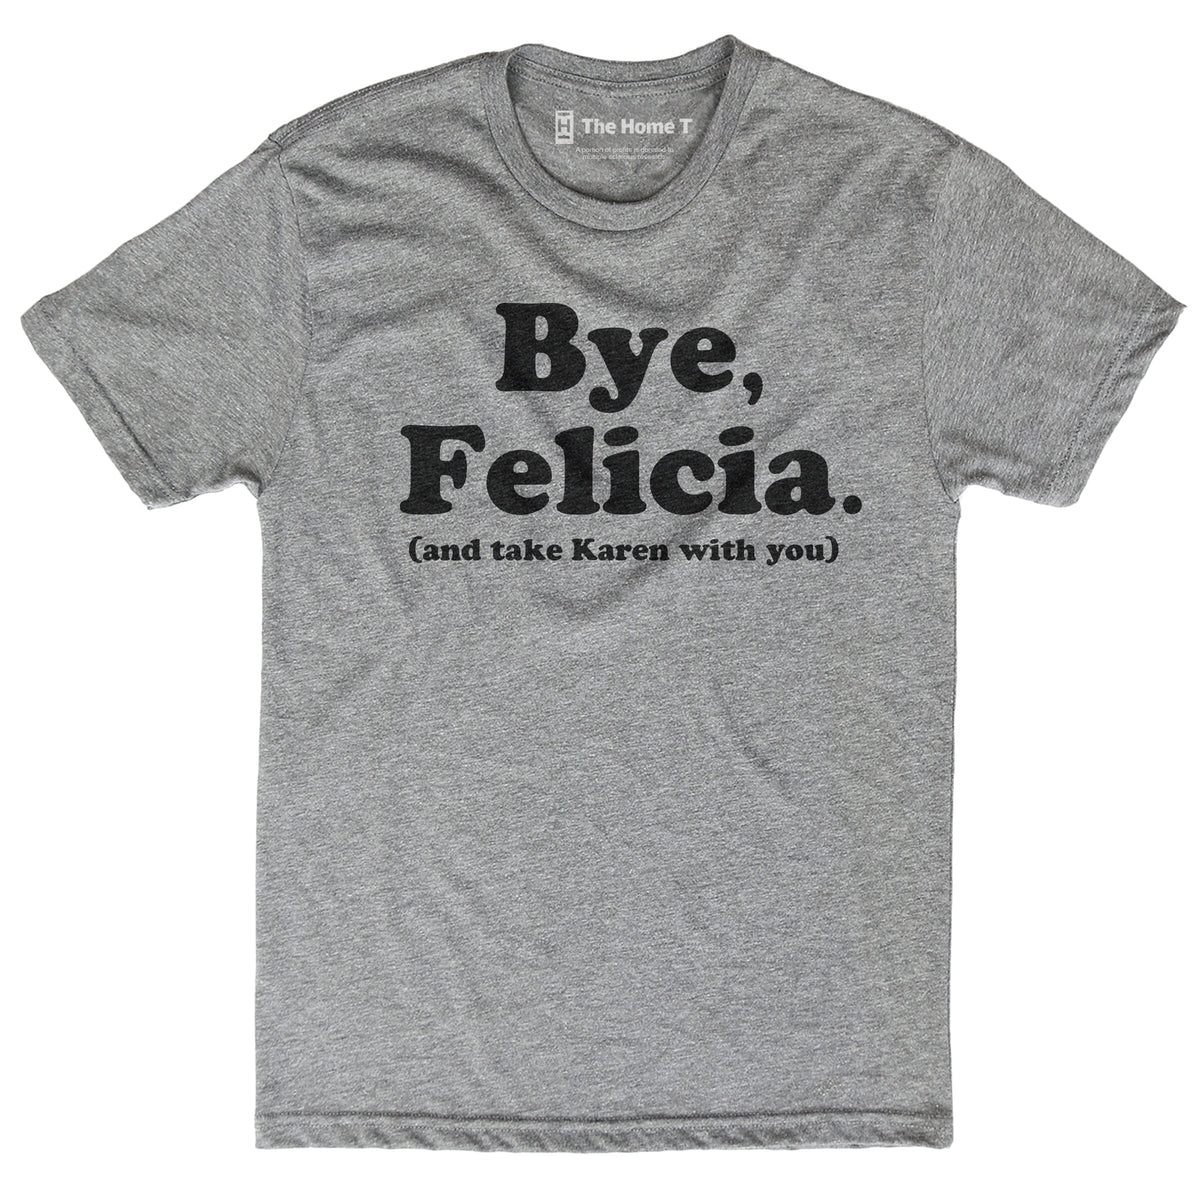 Women's Felicia Be Your Own Flamingo V-Neck T-Shirt